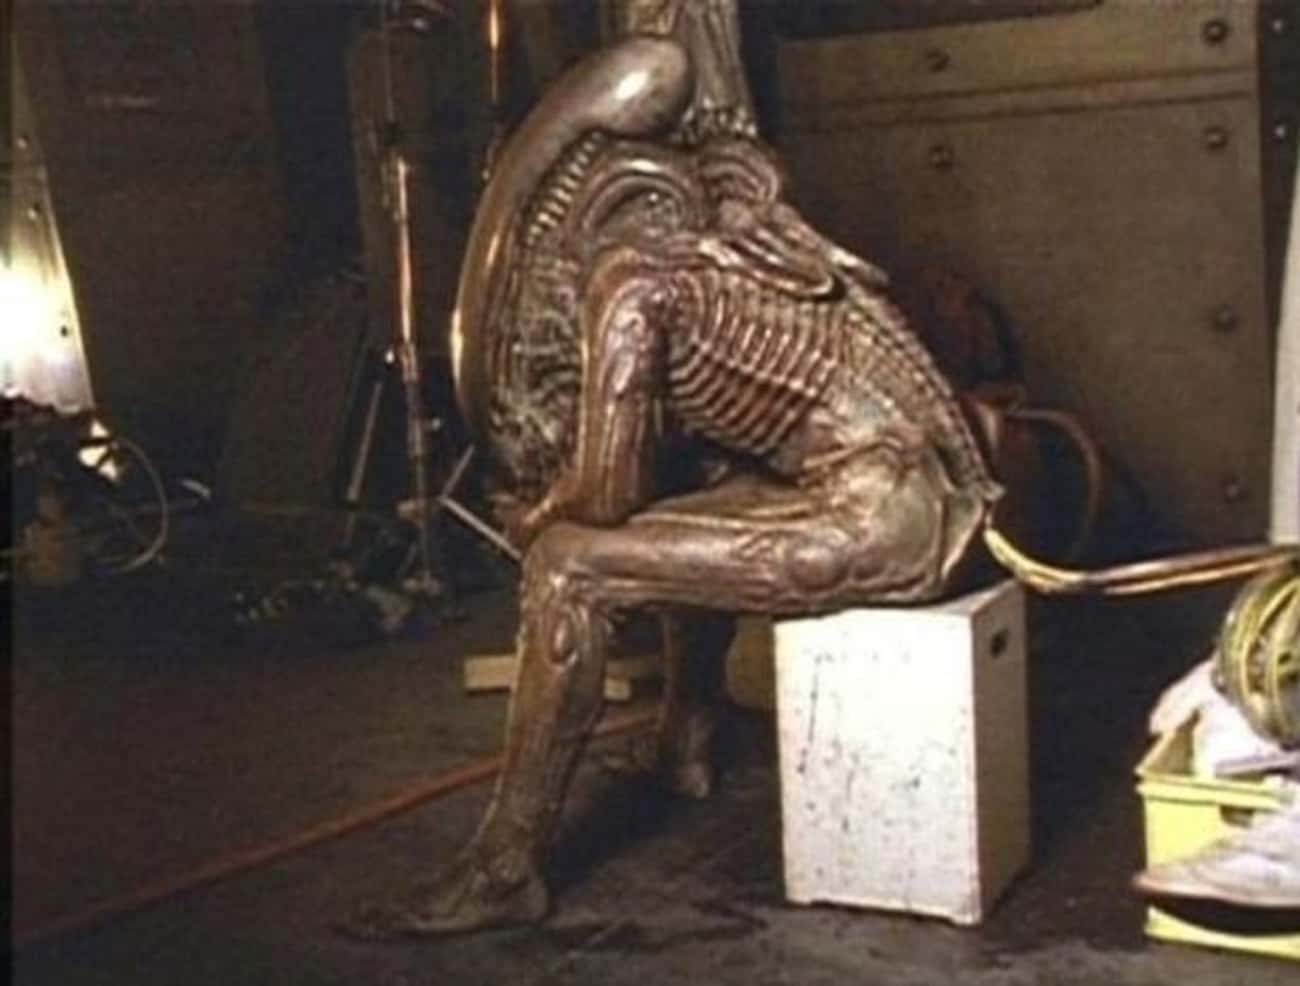 The Sad Alien That Became A Meme, &#34;Alien&#34;